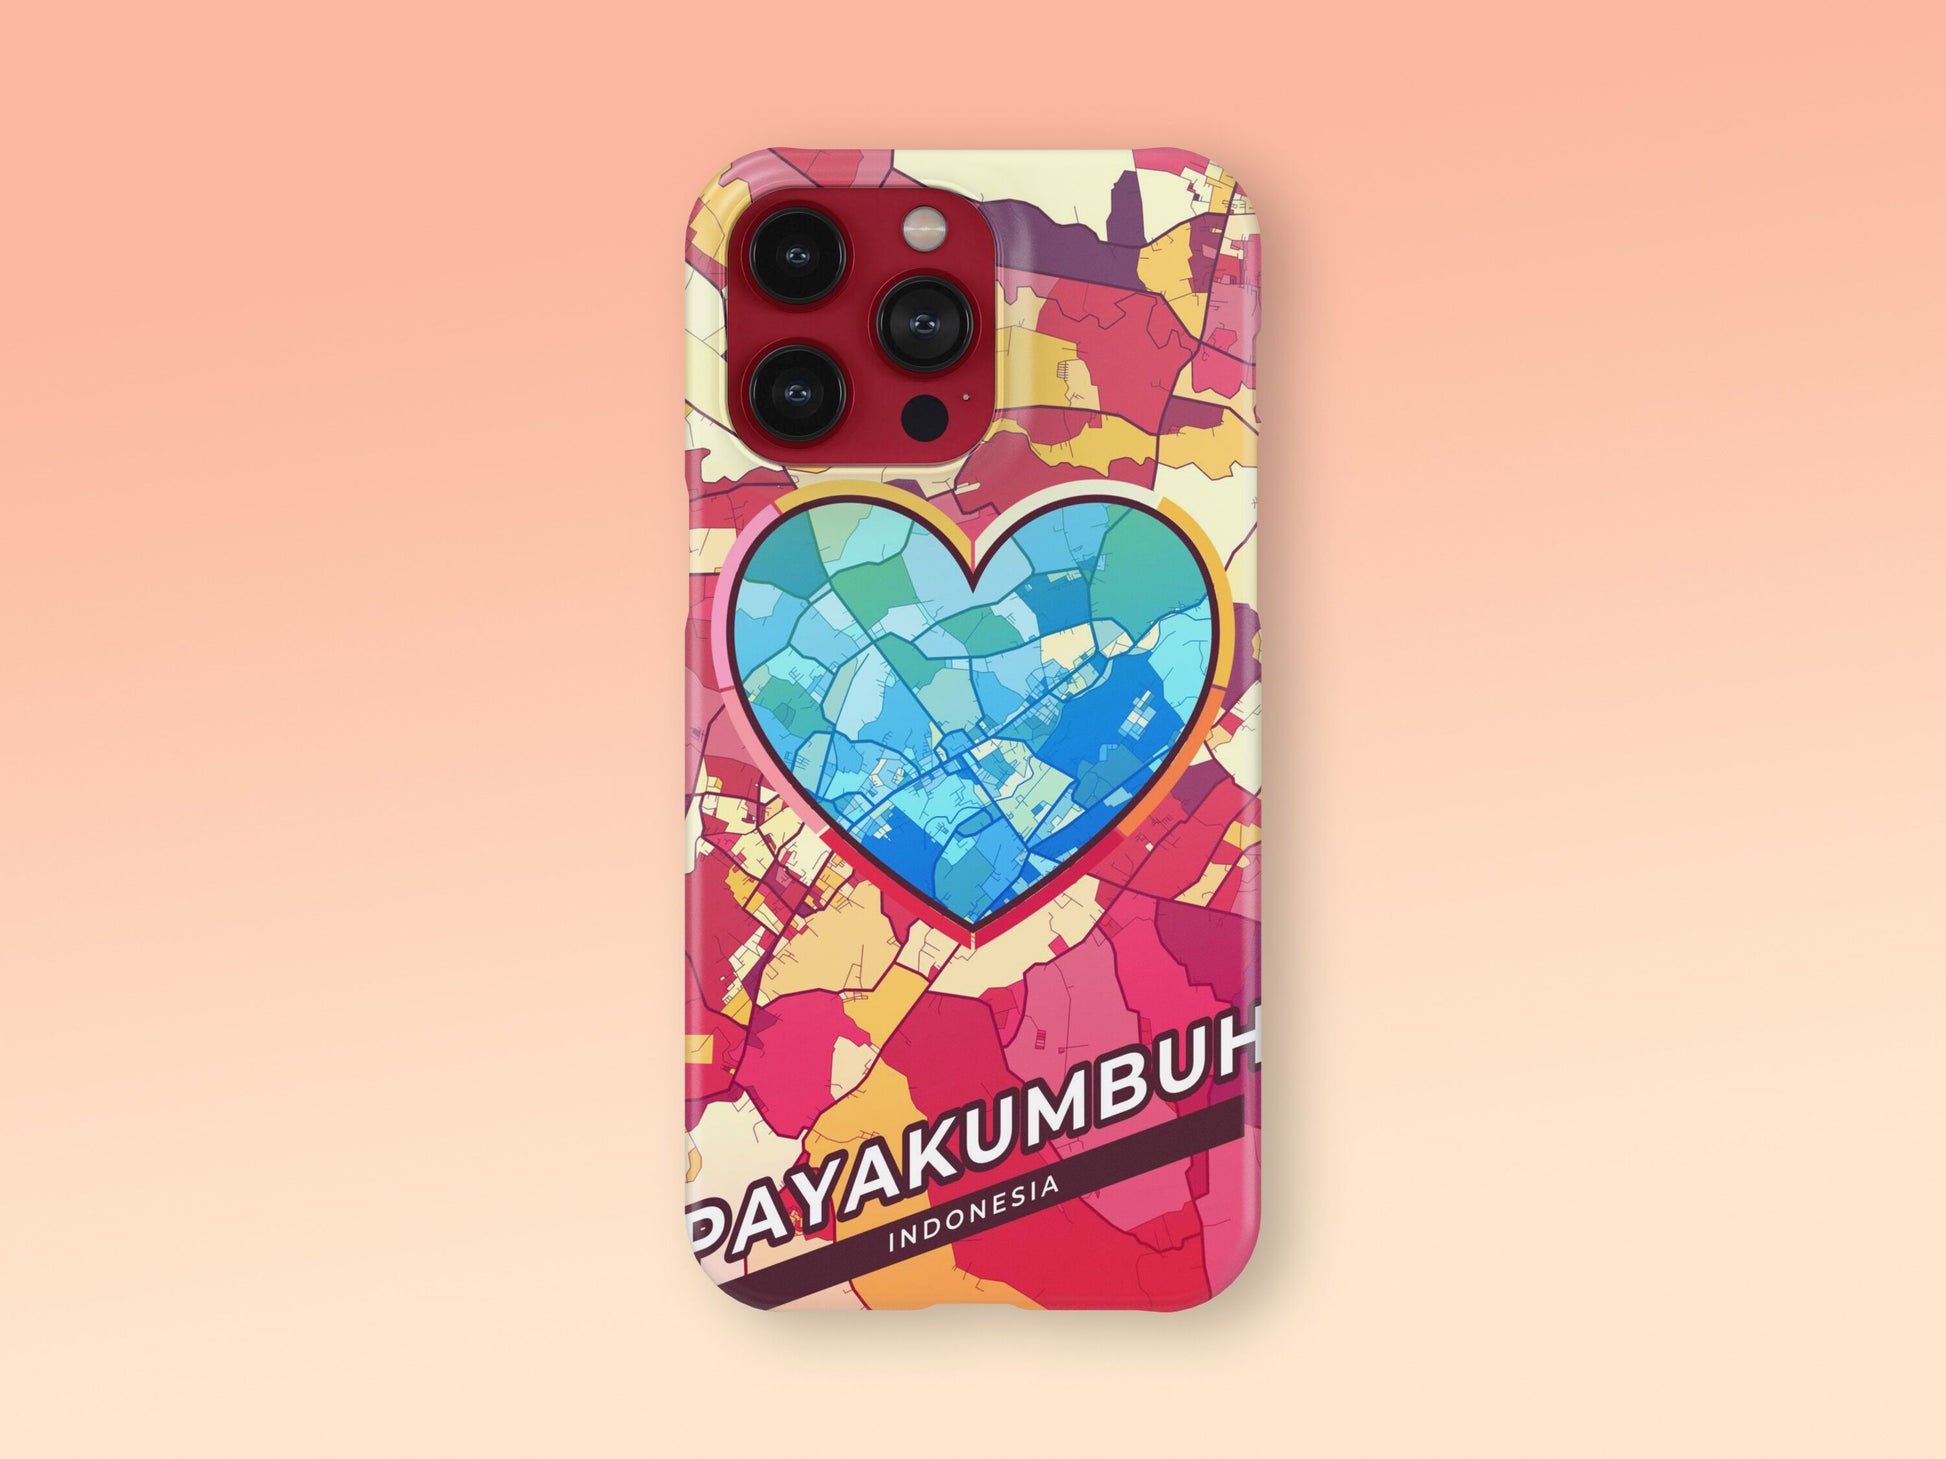 Payakumbuh Indonesia slim phone case with colorful icon 2